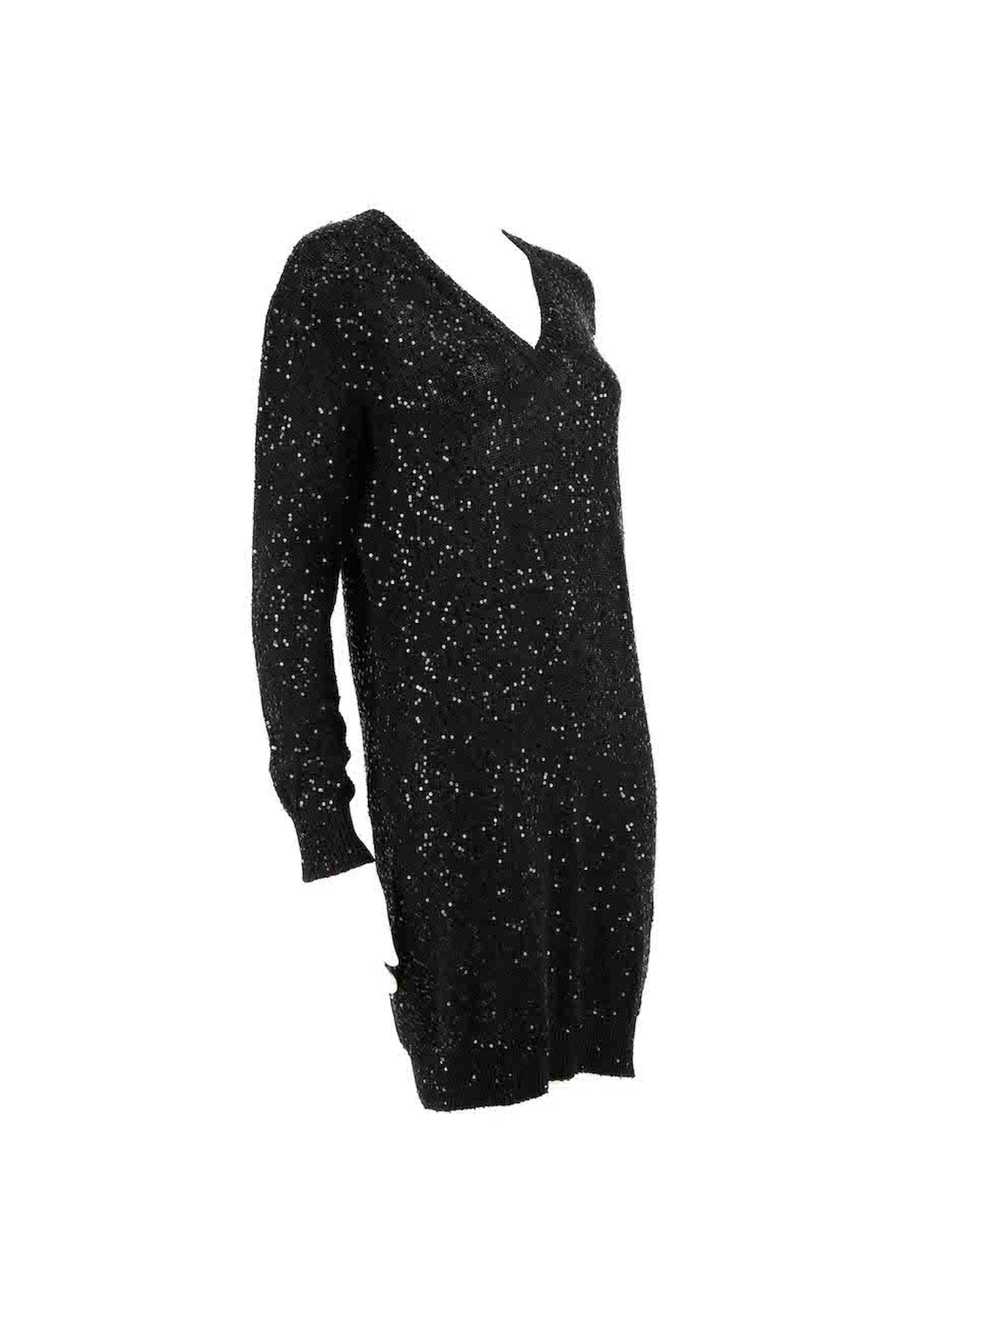 Stella McCartney Black Knit Sequinned Mini Dress - image 2